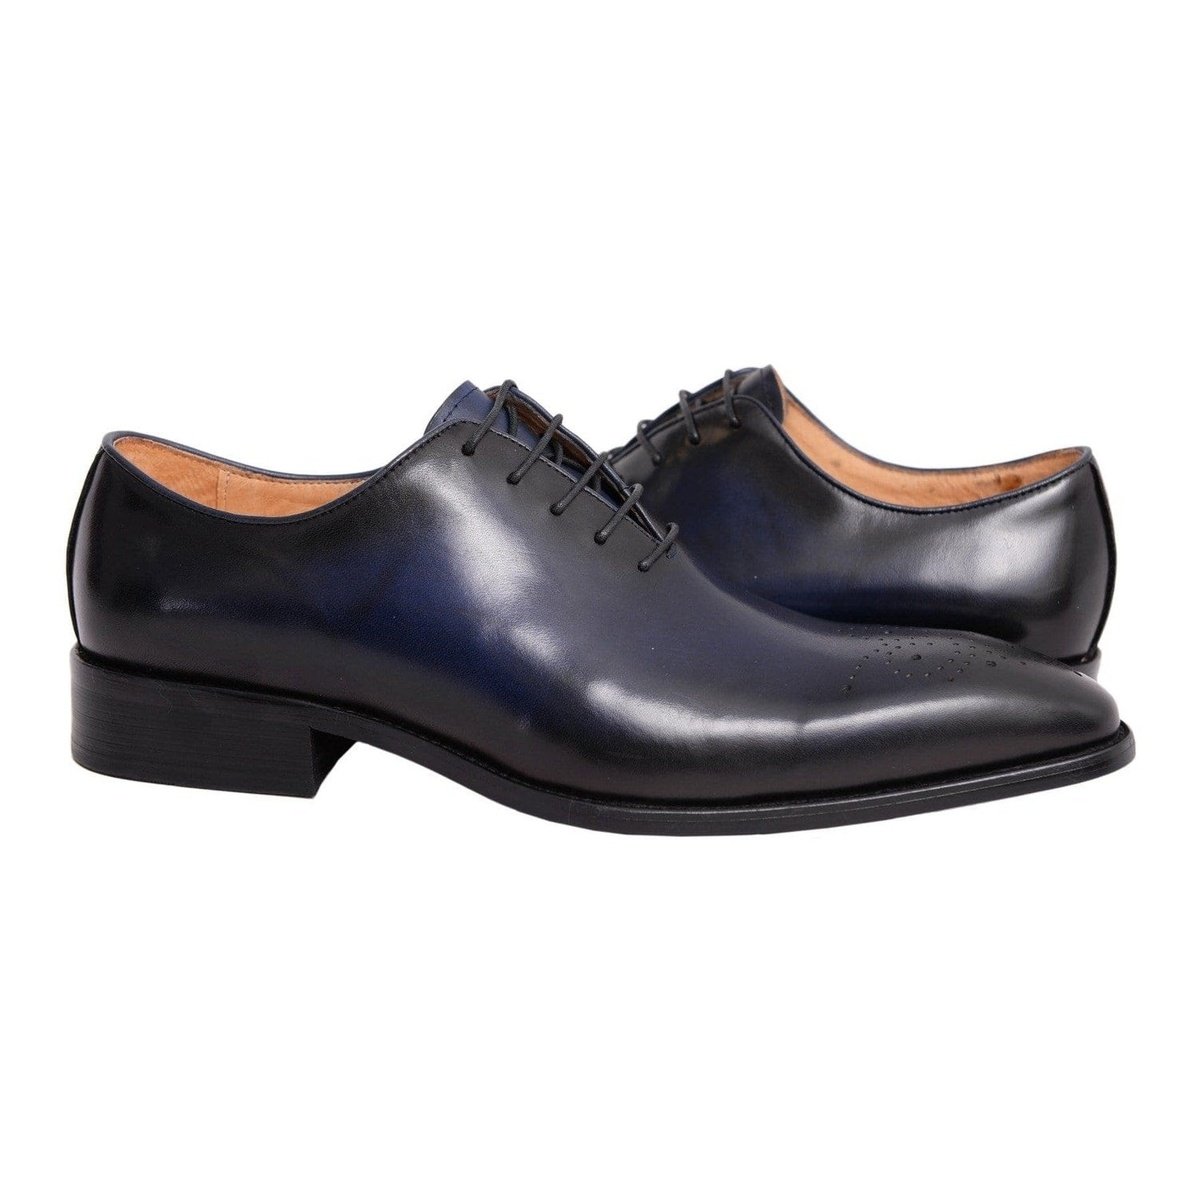 Carrucci SHOES 8.5 Carrucci Solid Navy Blue Whole Cut Oxford Leather Dress Shoes